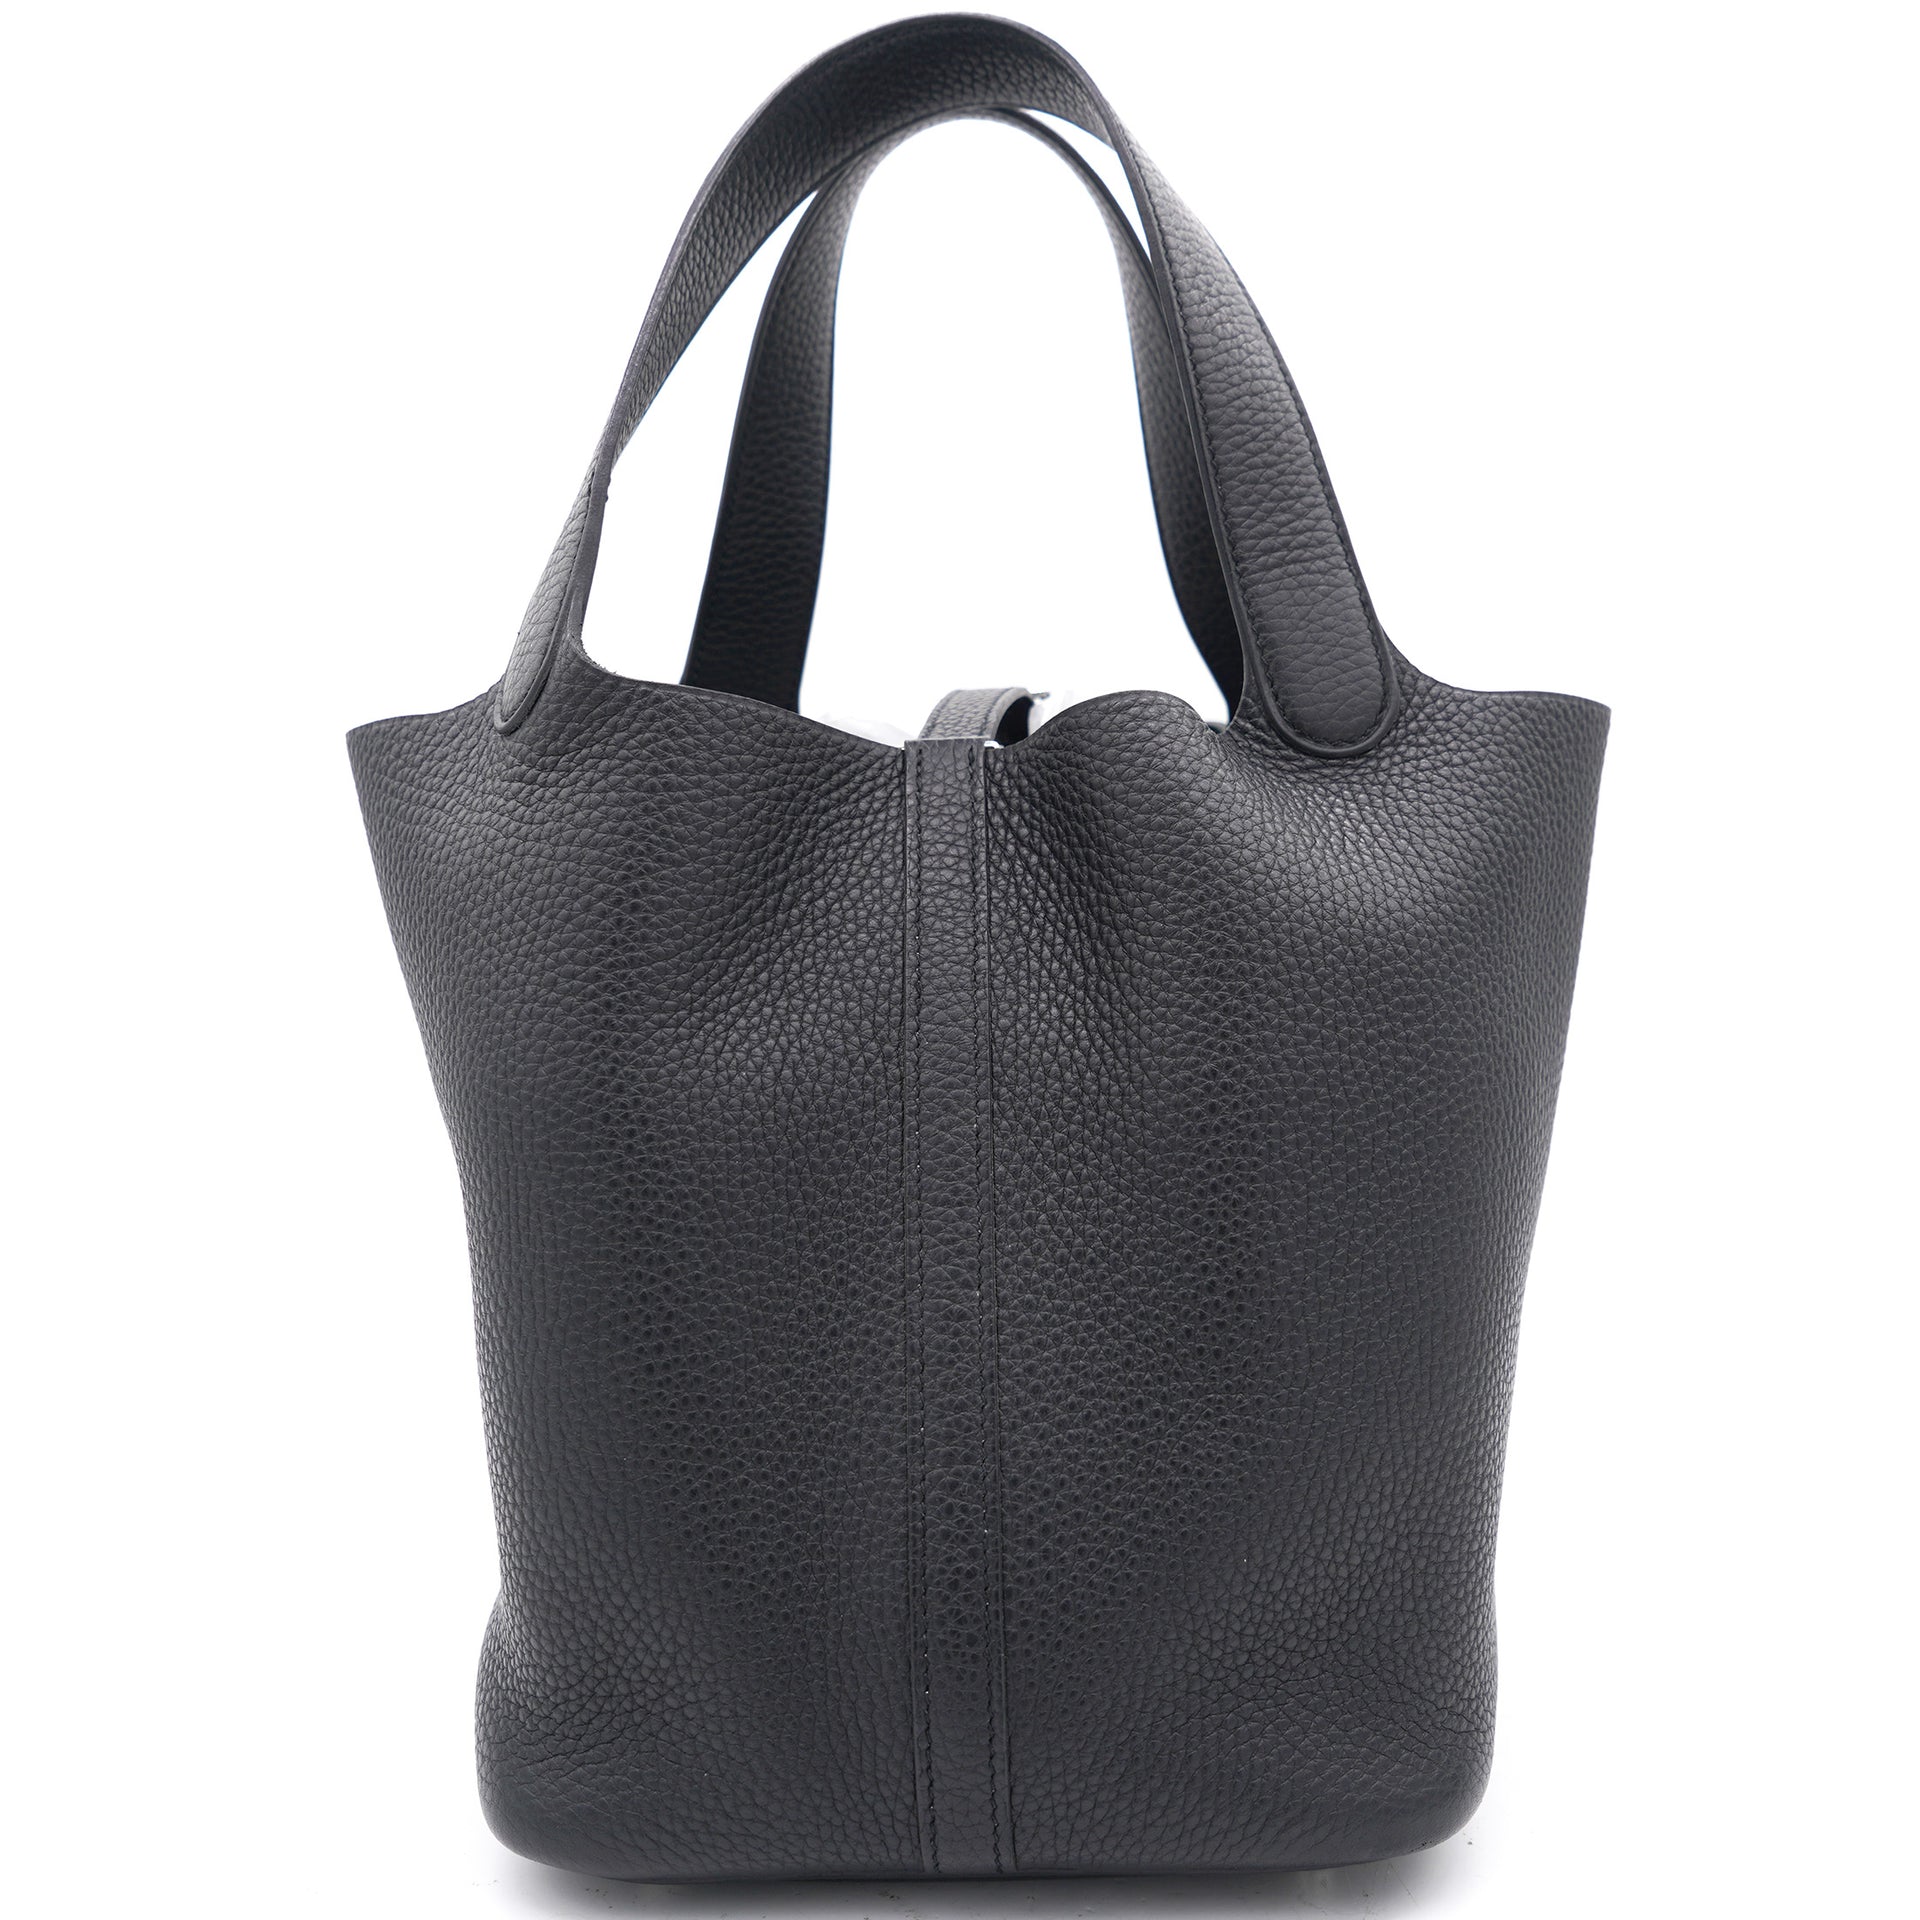 zaskiagotix carried L26 bag (Noir) in taurillon clemence leather with  shoulder strap & handles & palladium plated…